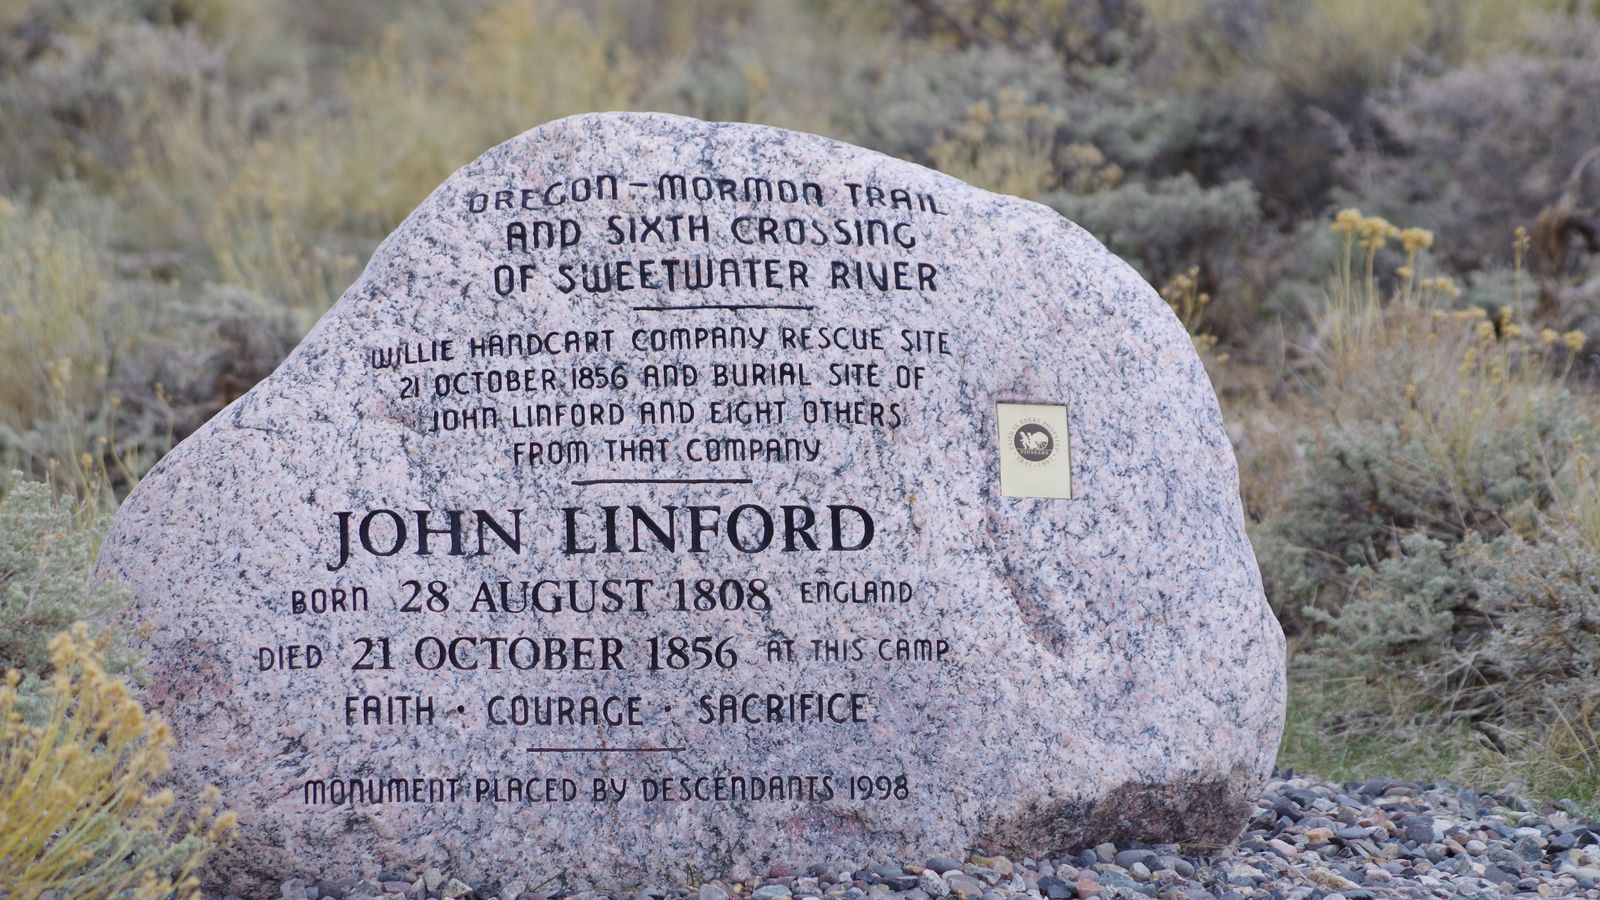 Memorial stone for John Linford at the Wyoming Mormon Historic Handcart Site.